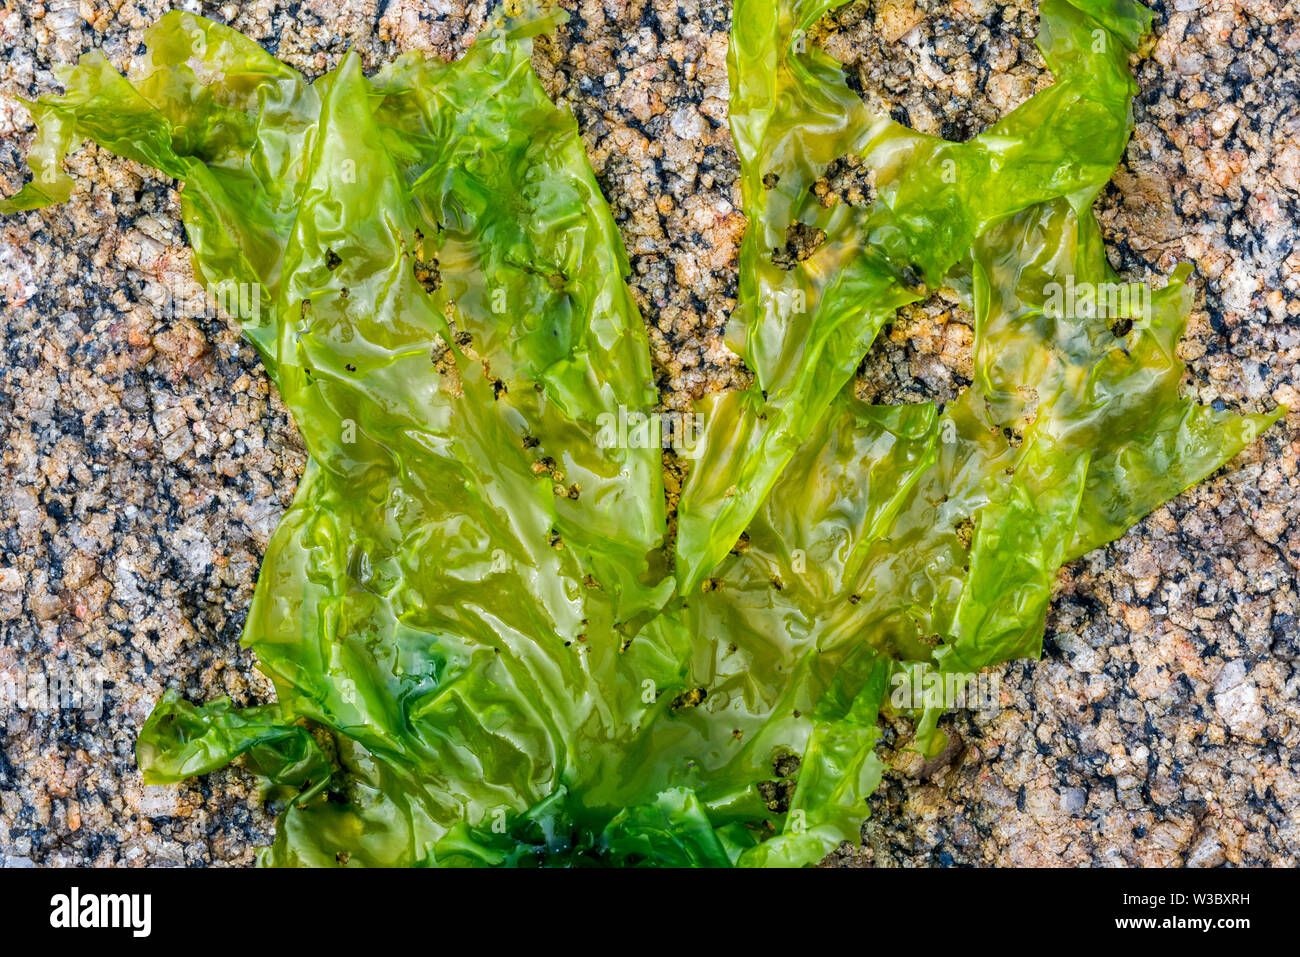 Sea lettuce (Ulva lactuca) edible green alga washed ashore on rocky beach Stock Photo